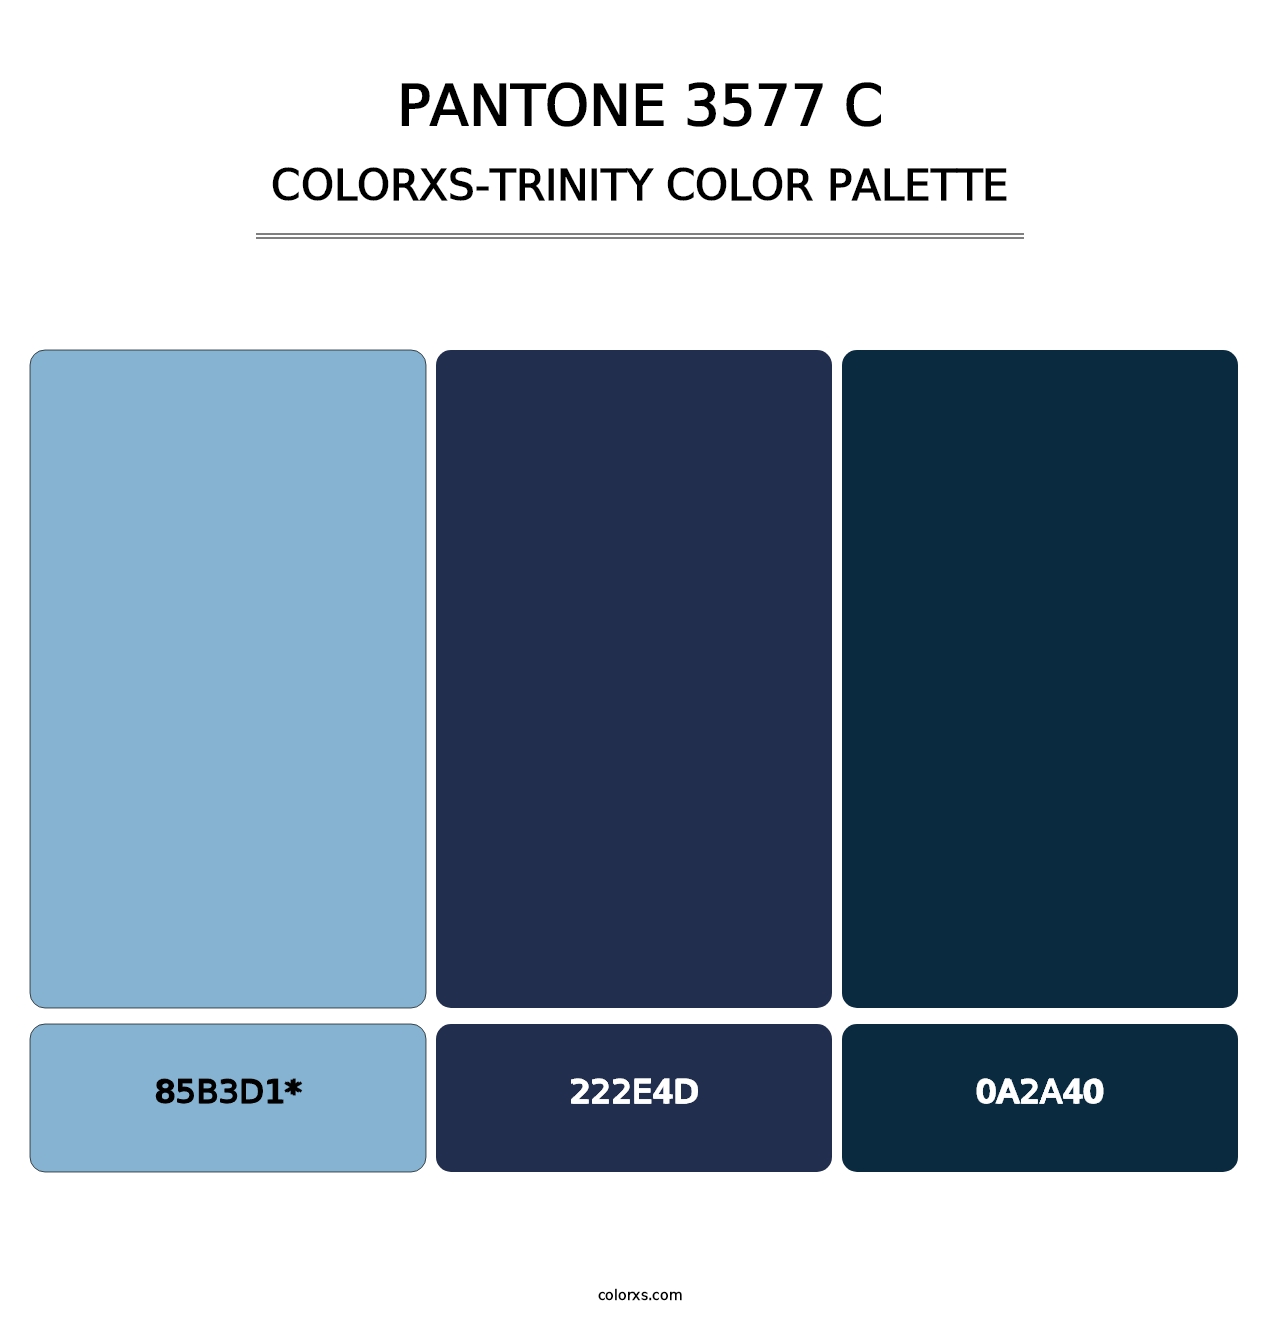 PANTONE 3577 C - Colorxs Trinity Palette